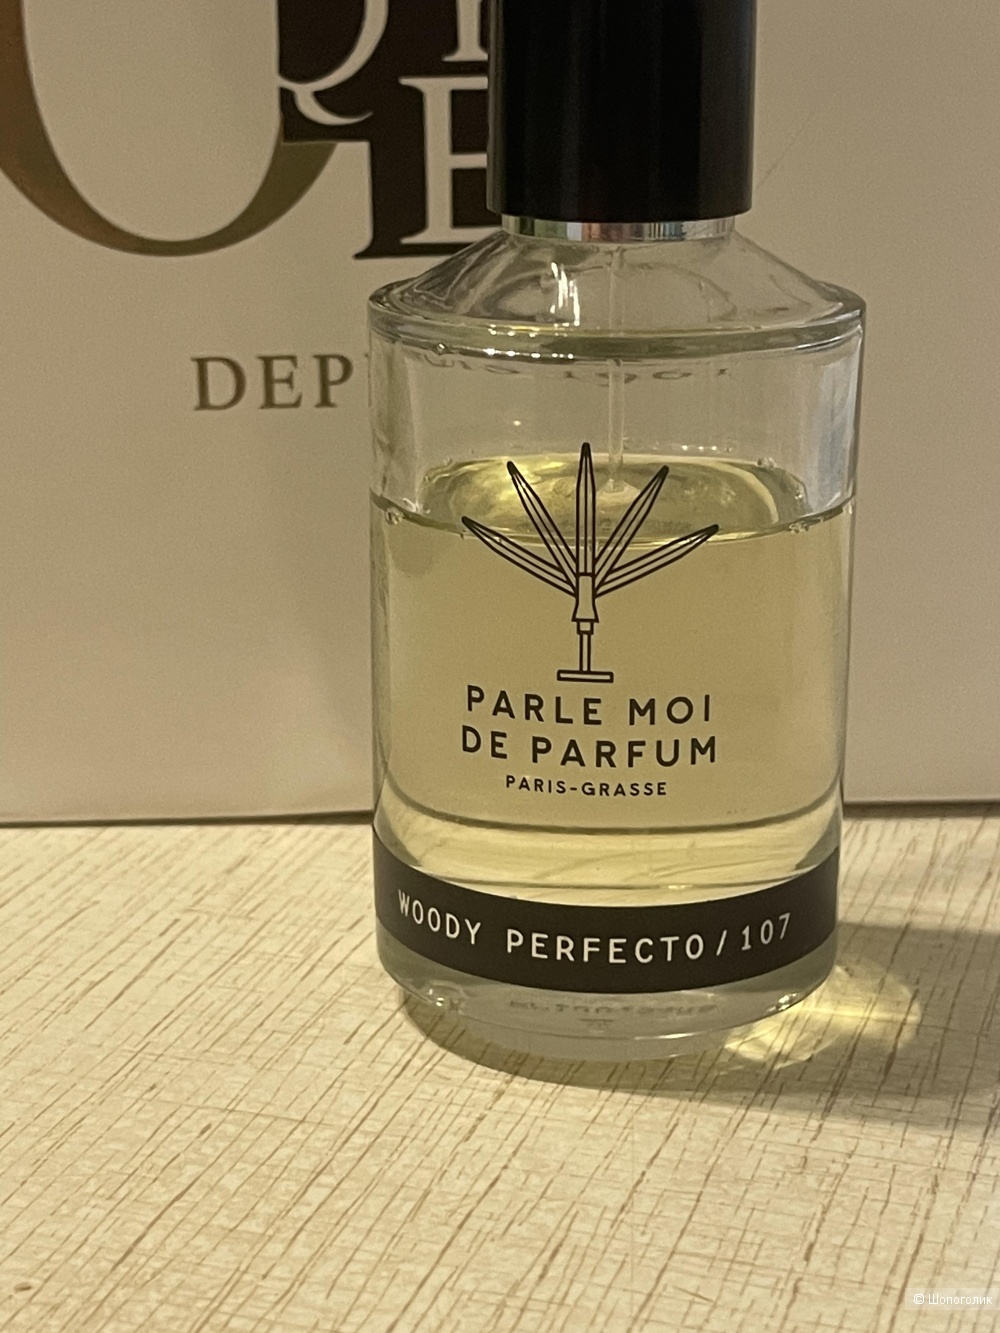 Parle Moi de parfum woody perfecto / 107 edp 80ml